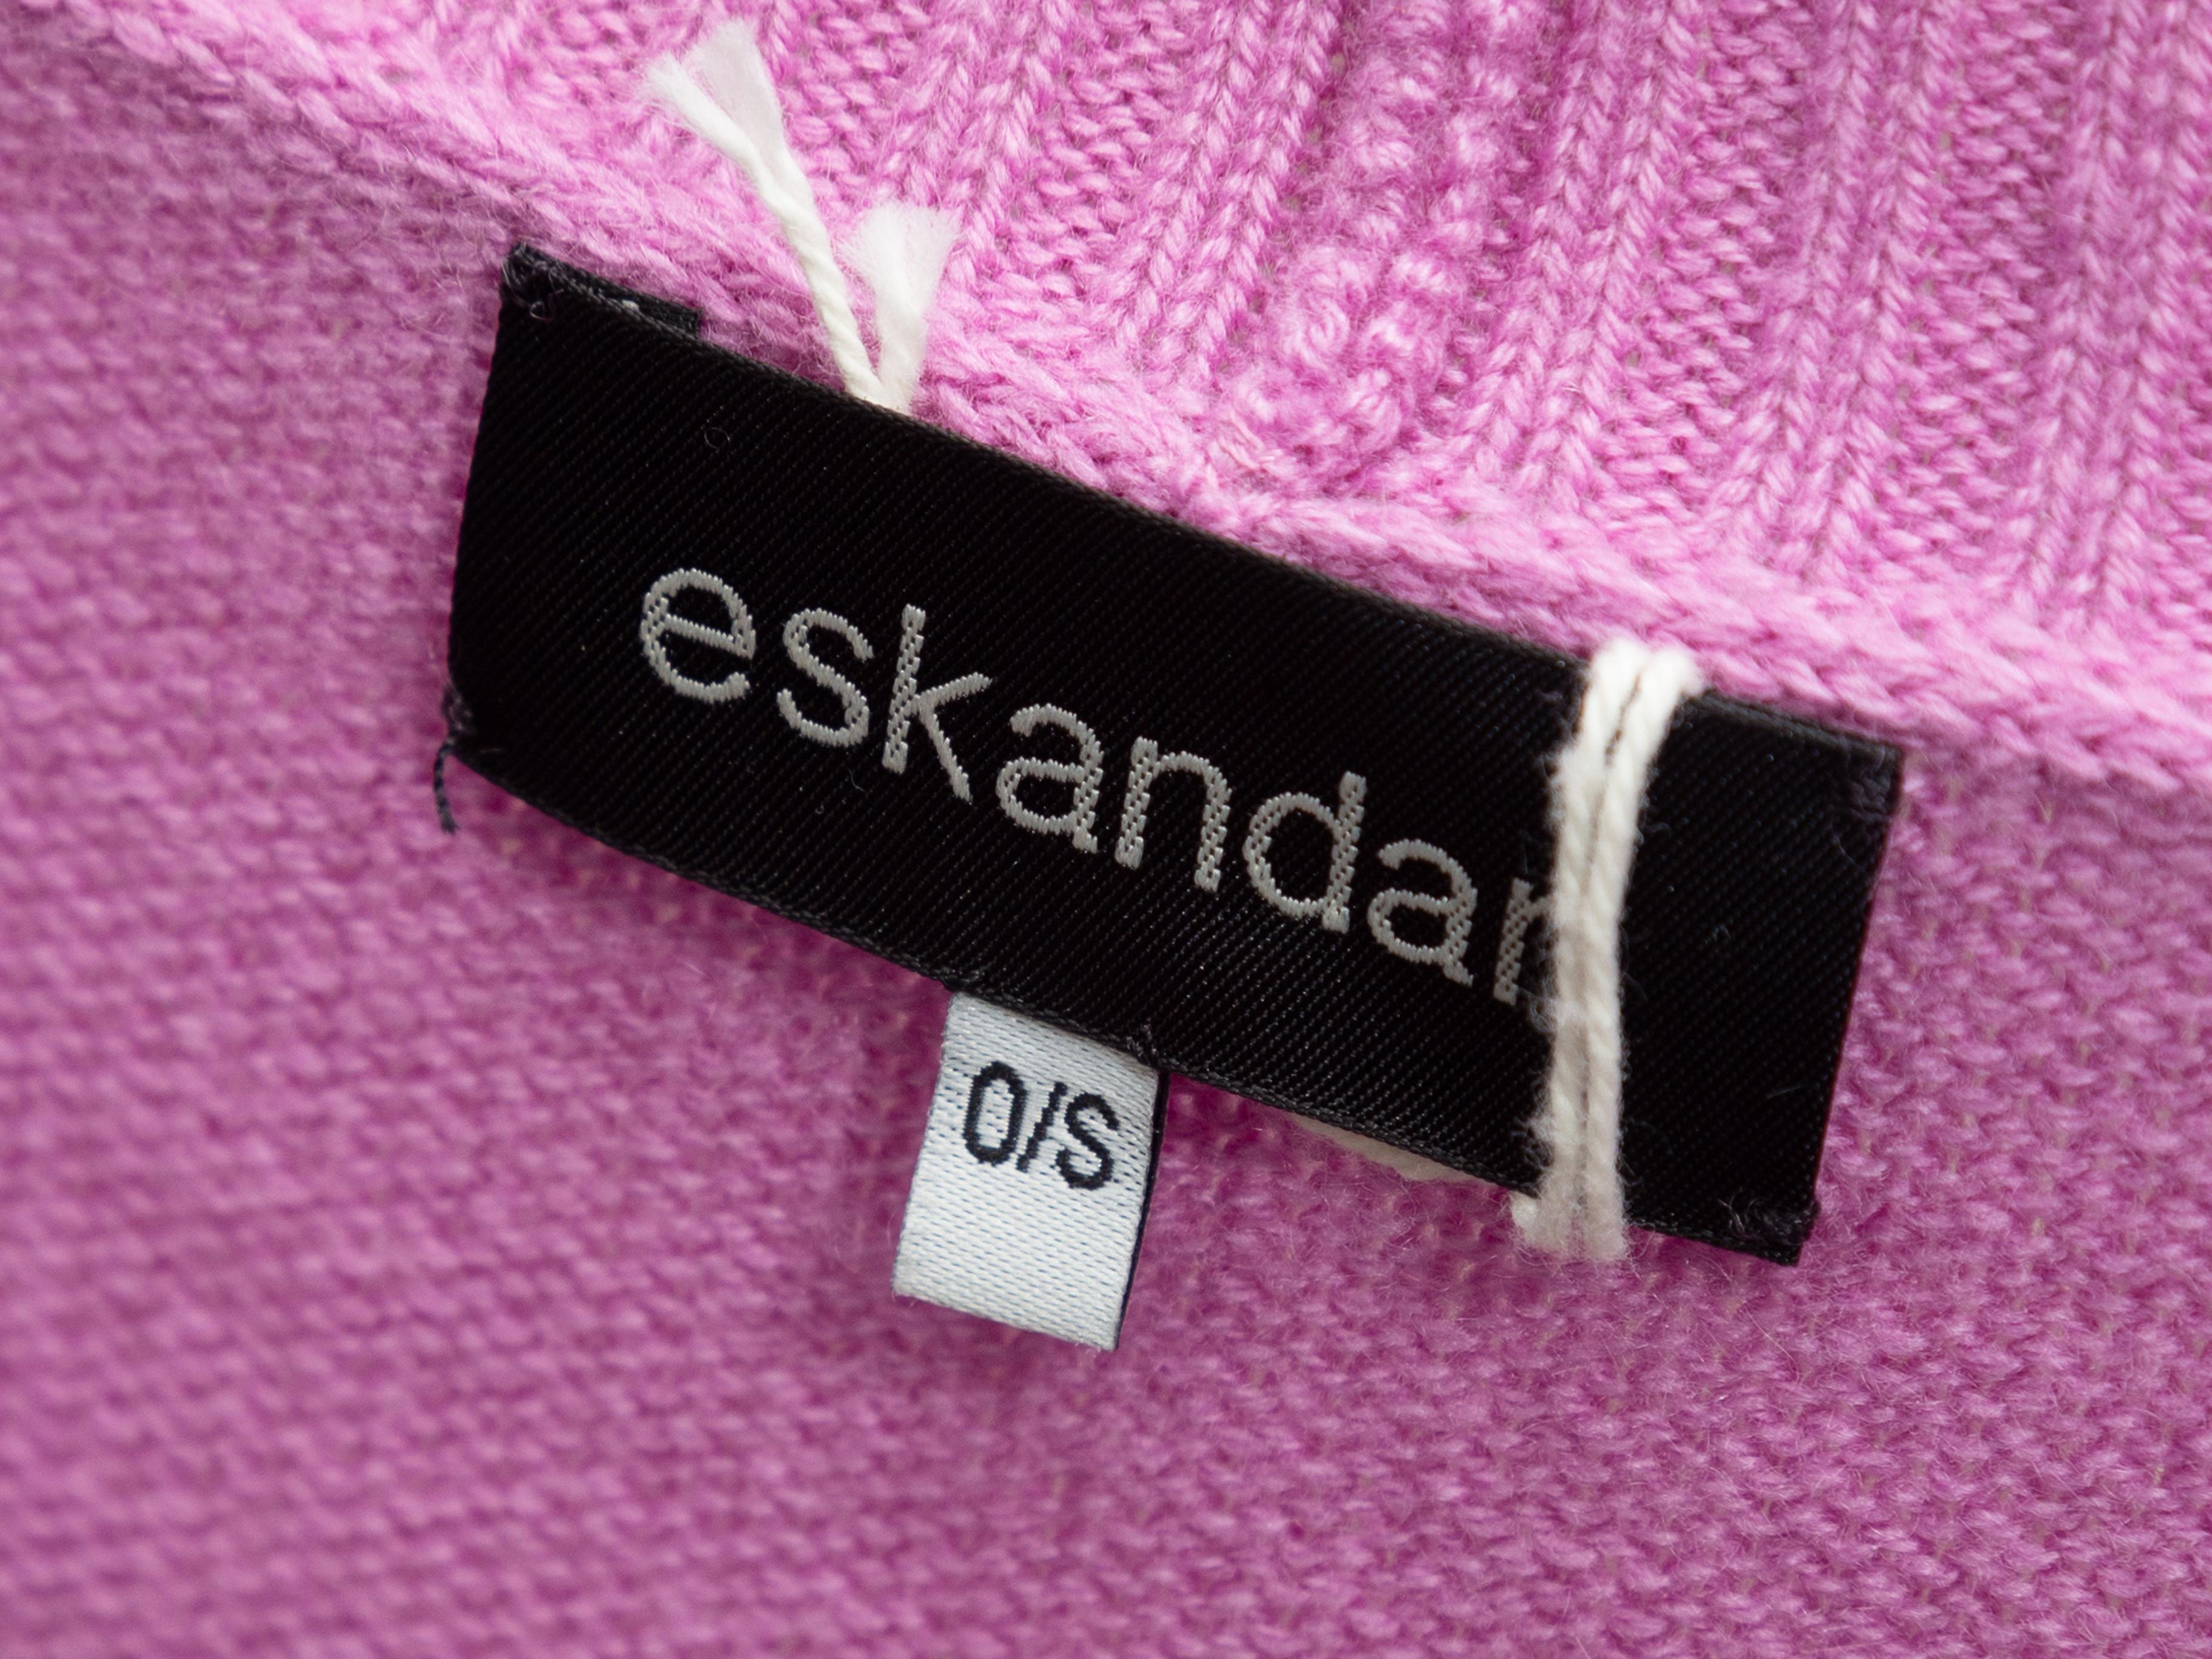 Product details: Light fuchsia sweater vest by Eskandar. Plunging V-neckline. 29